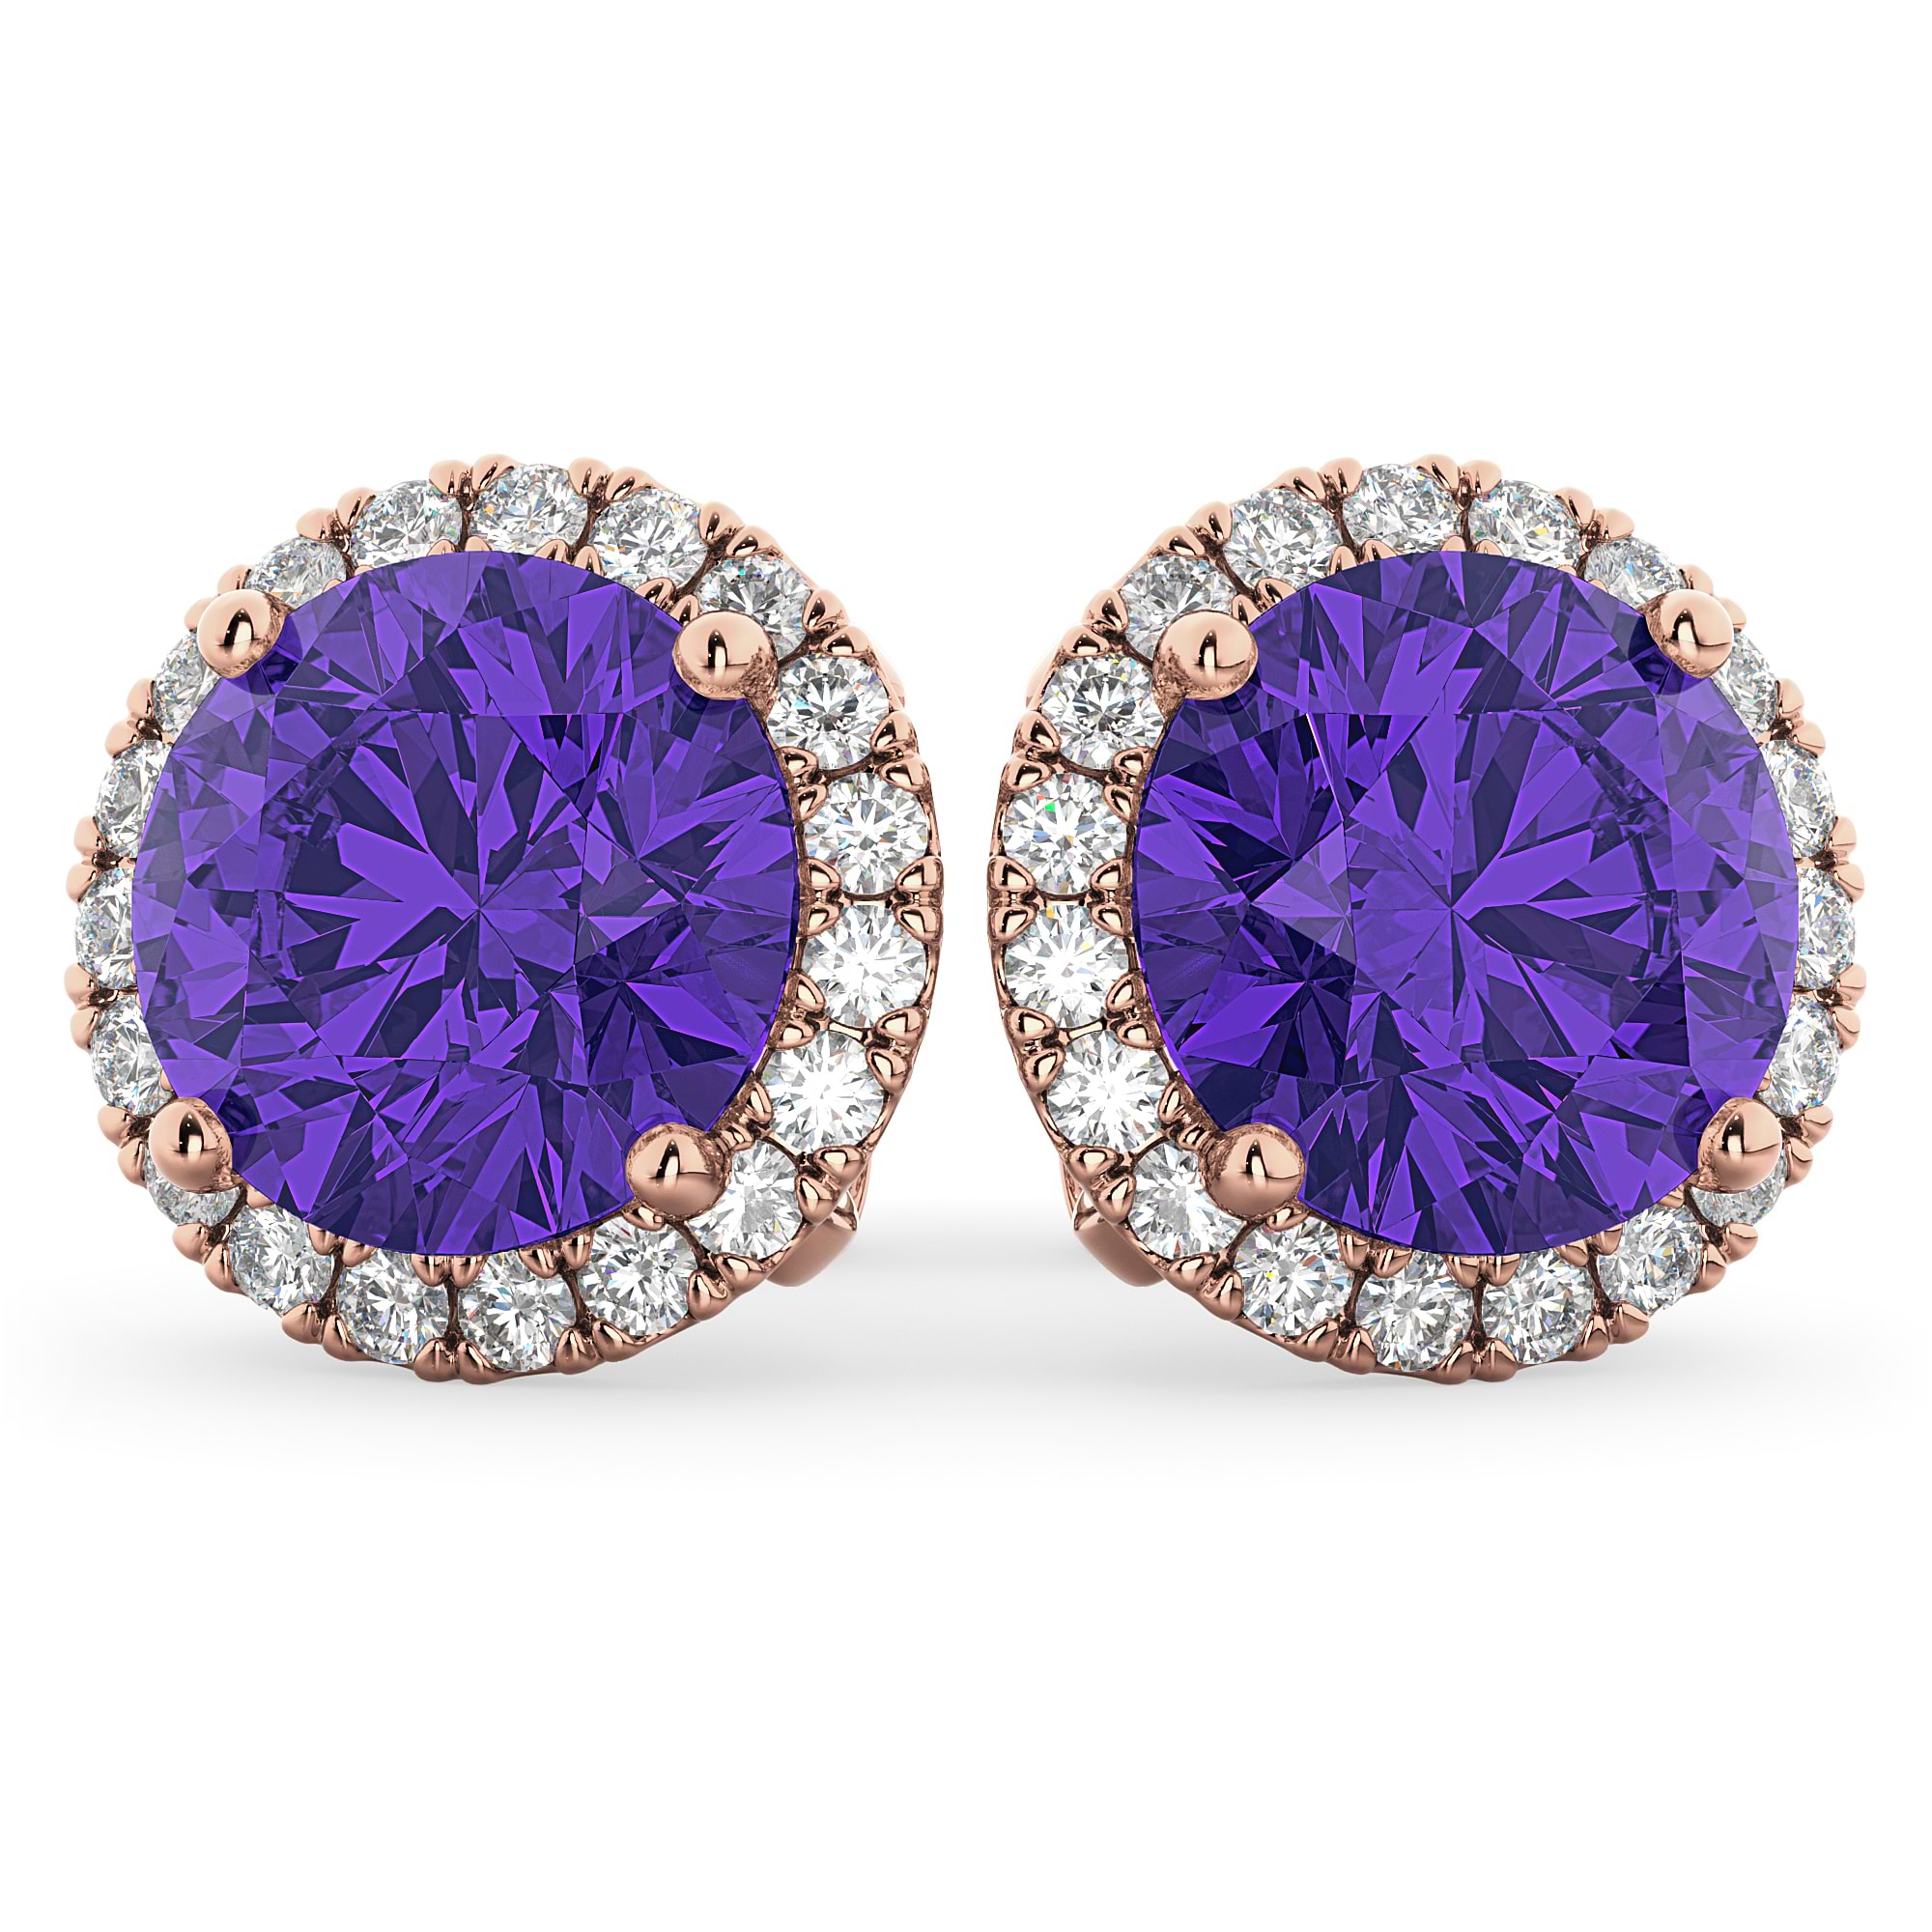 Halo Round Tanzanite & Diamond Earrings 14k Rose Gold (4.17ct)